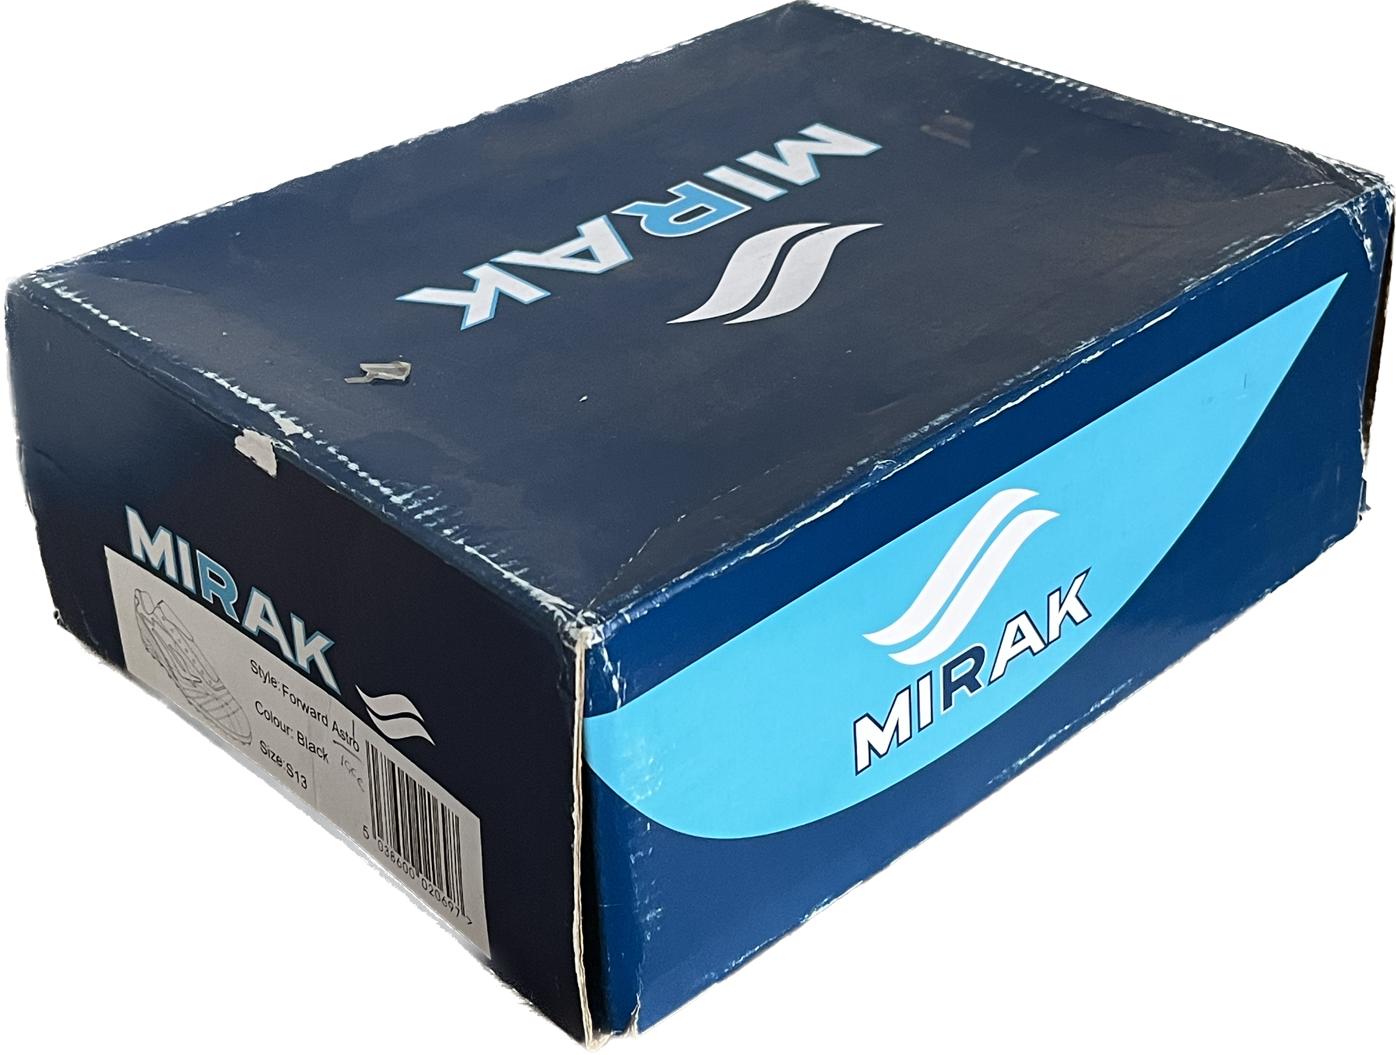 Mirak Astro Turf Trainers size UK13 NEW in Box